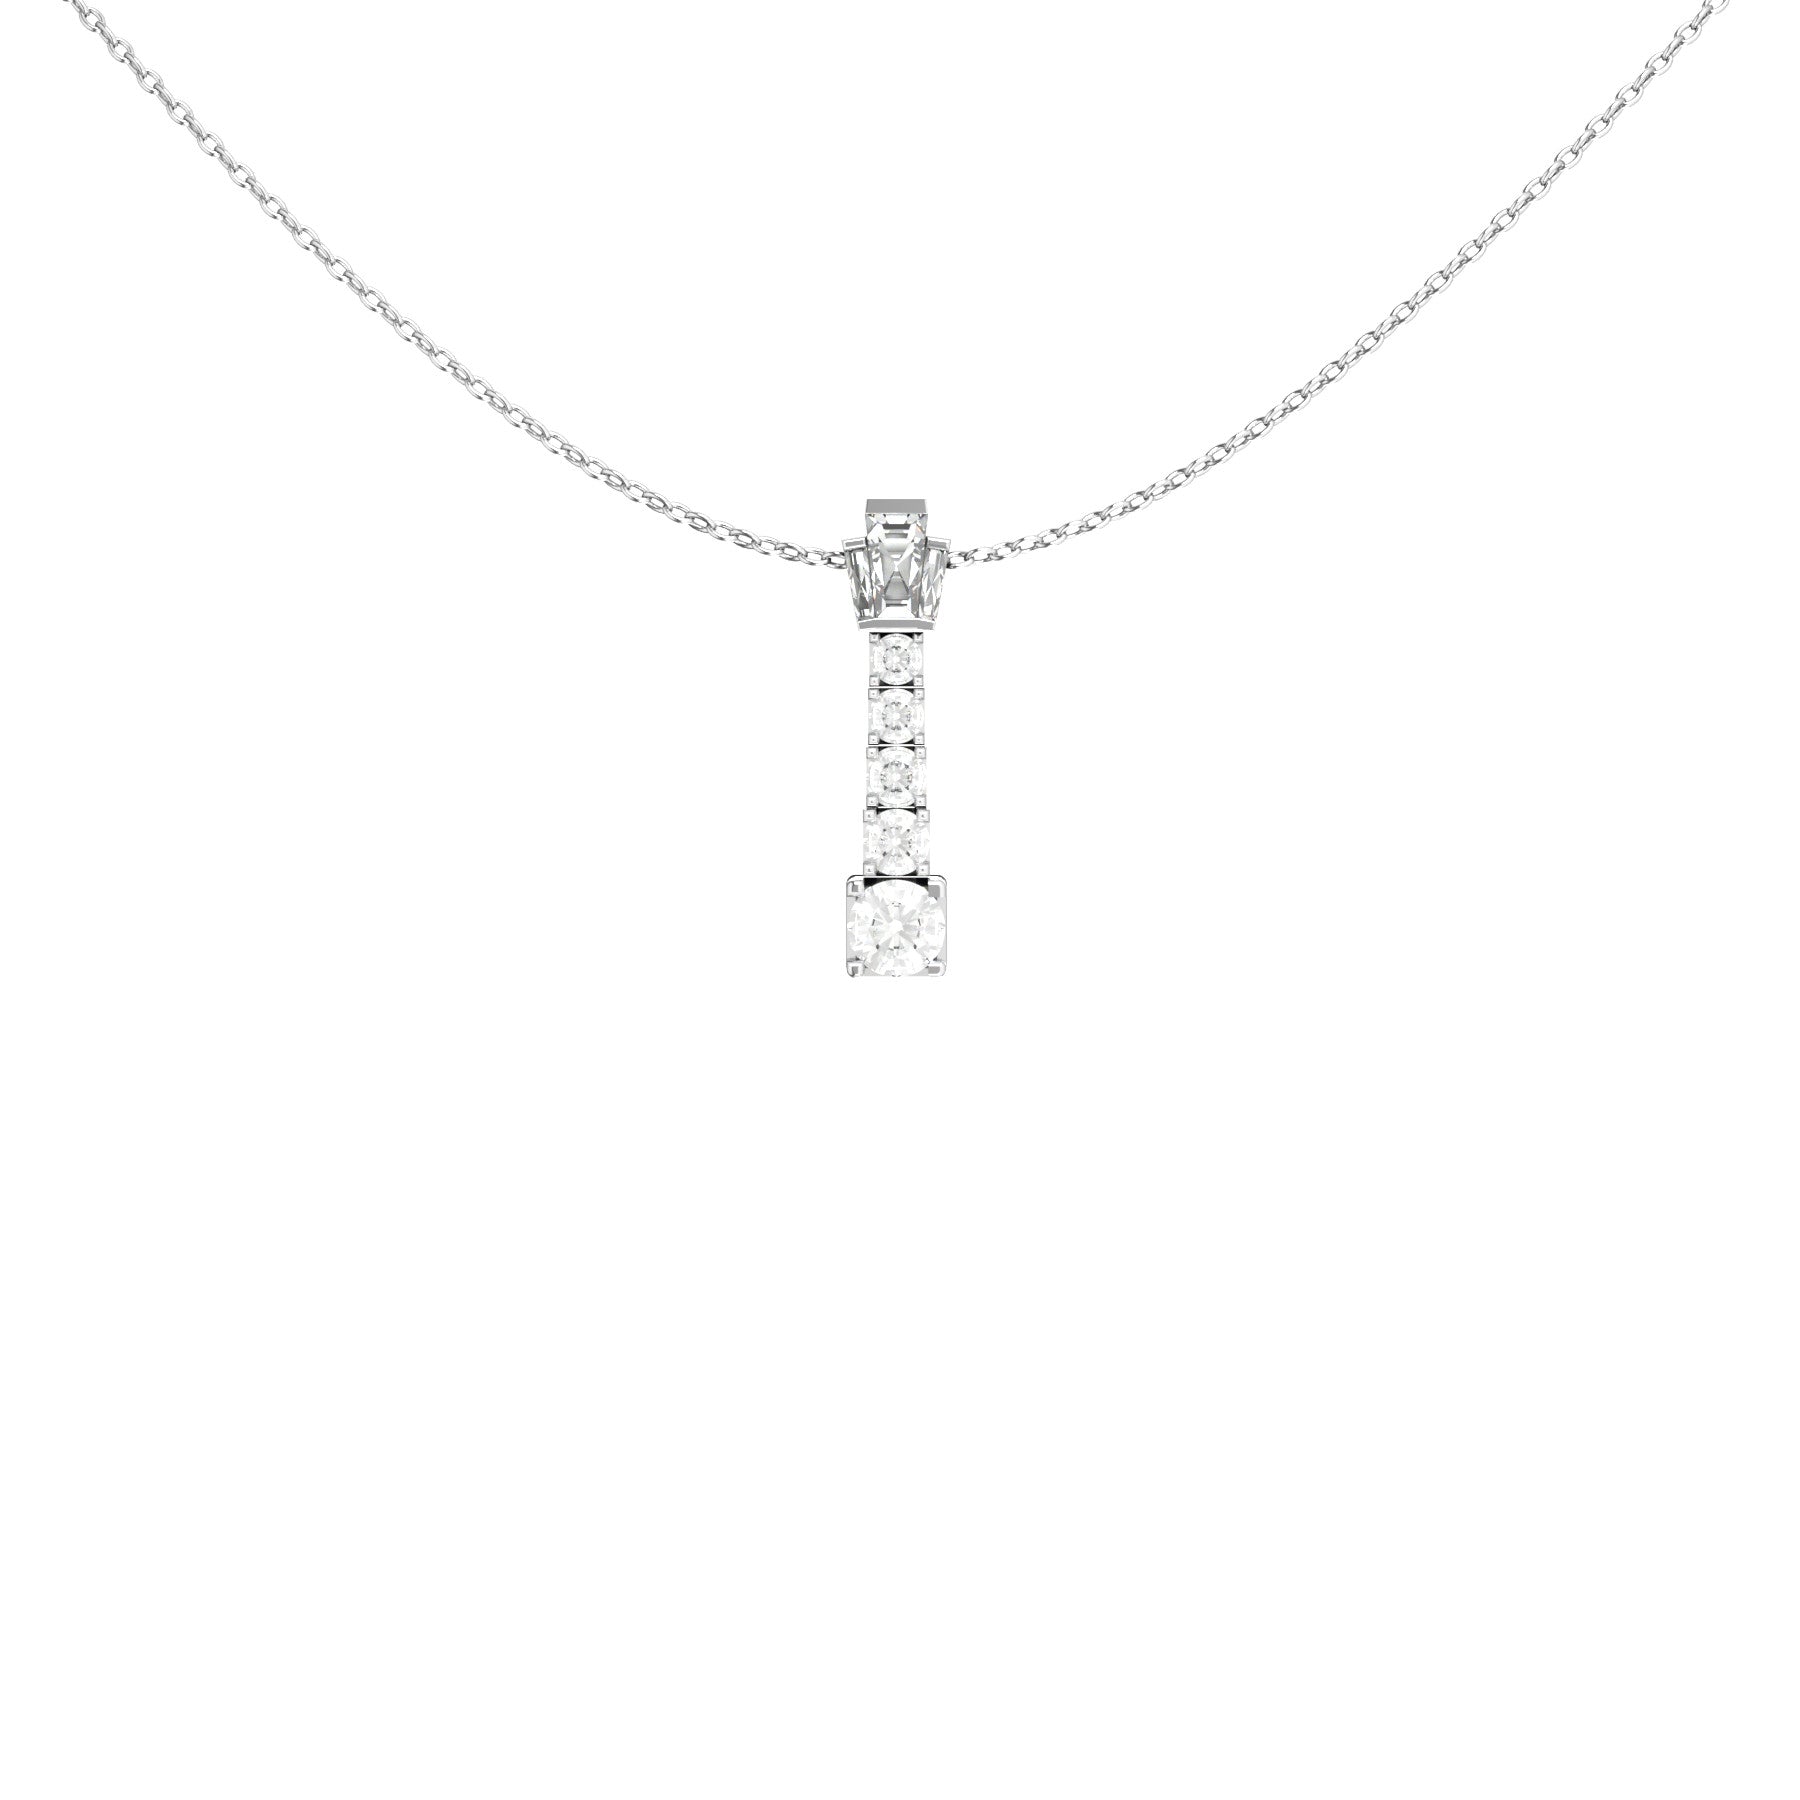 kira pendant, natural round diamonds, 18 K white gold, weight about 4,0 g (0.14 oz) length 21 mm